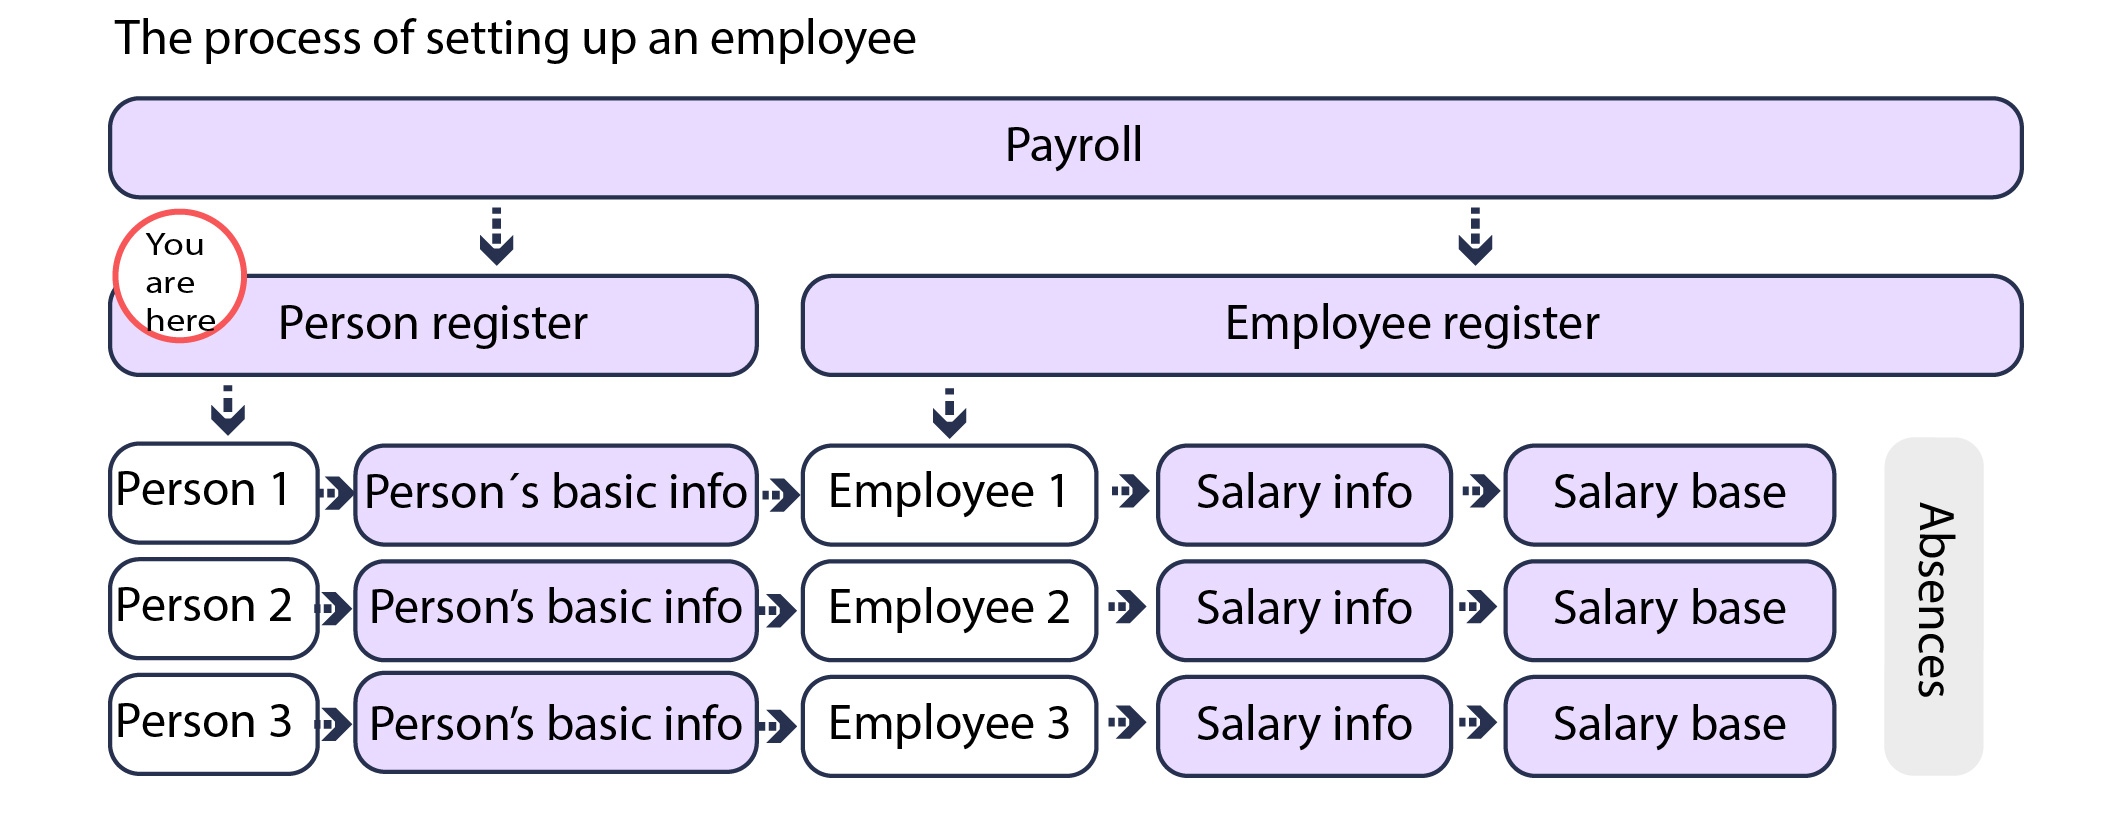 henkil_rekisteri_the_process_of_setting_up_an_employee_en.jpg